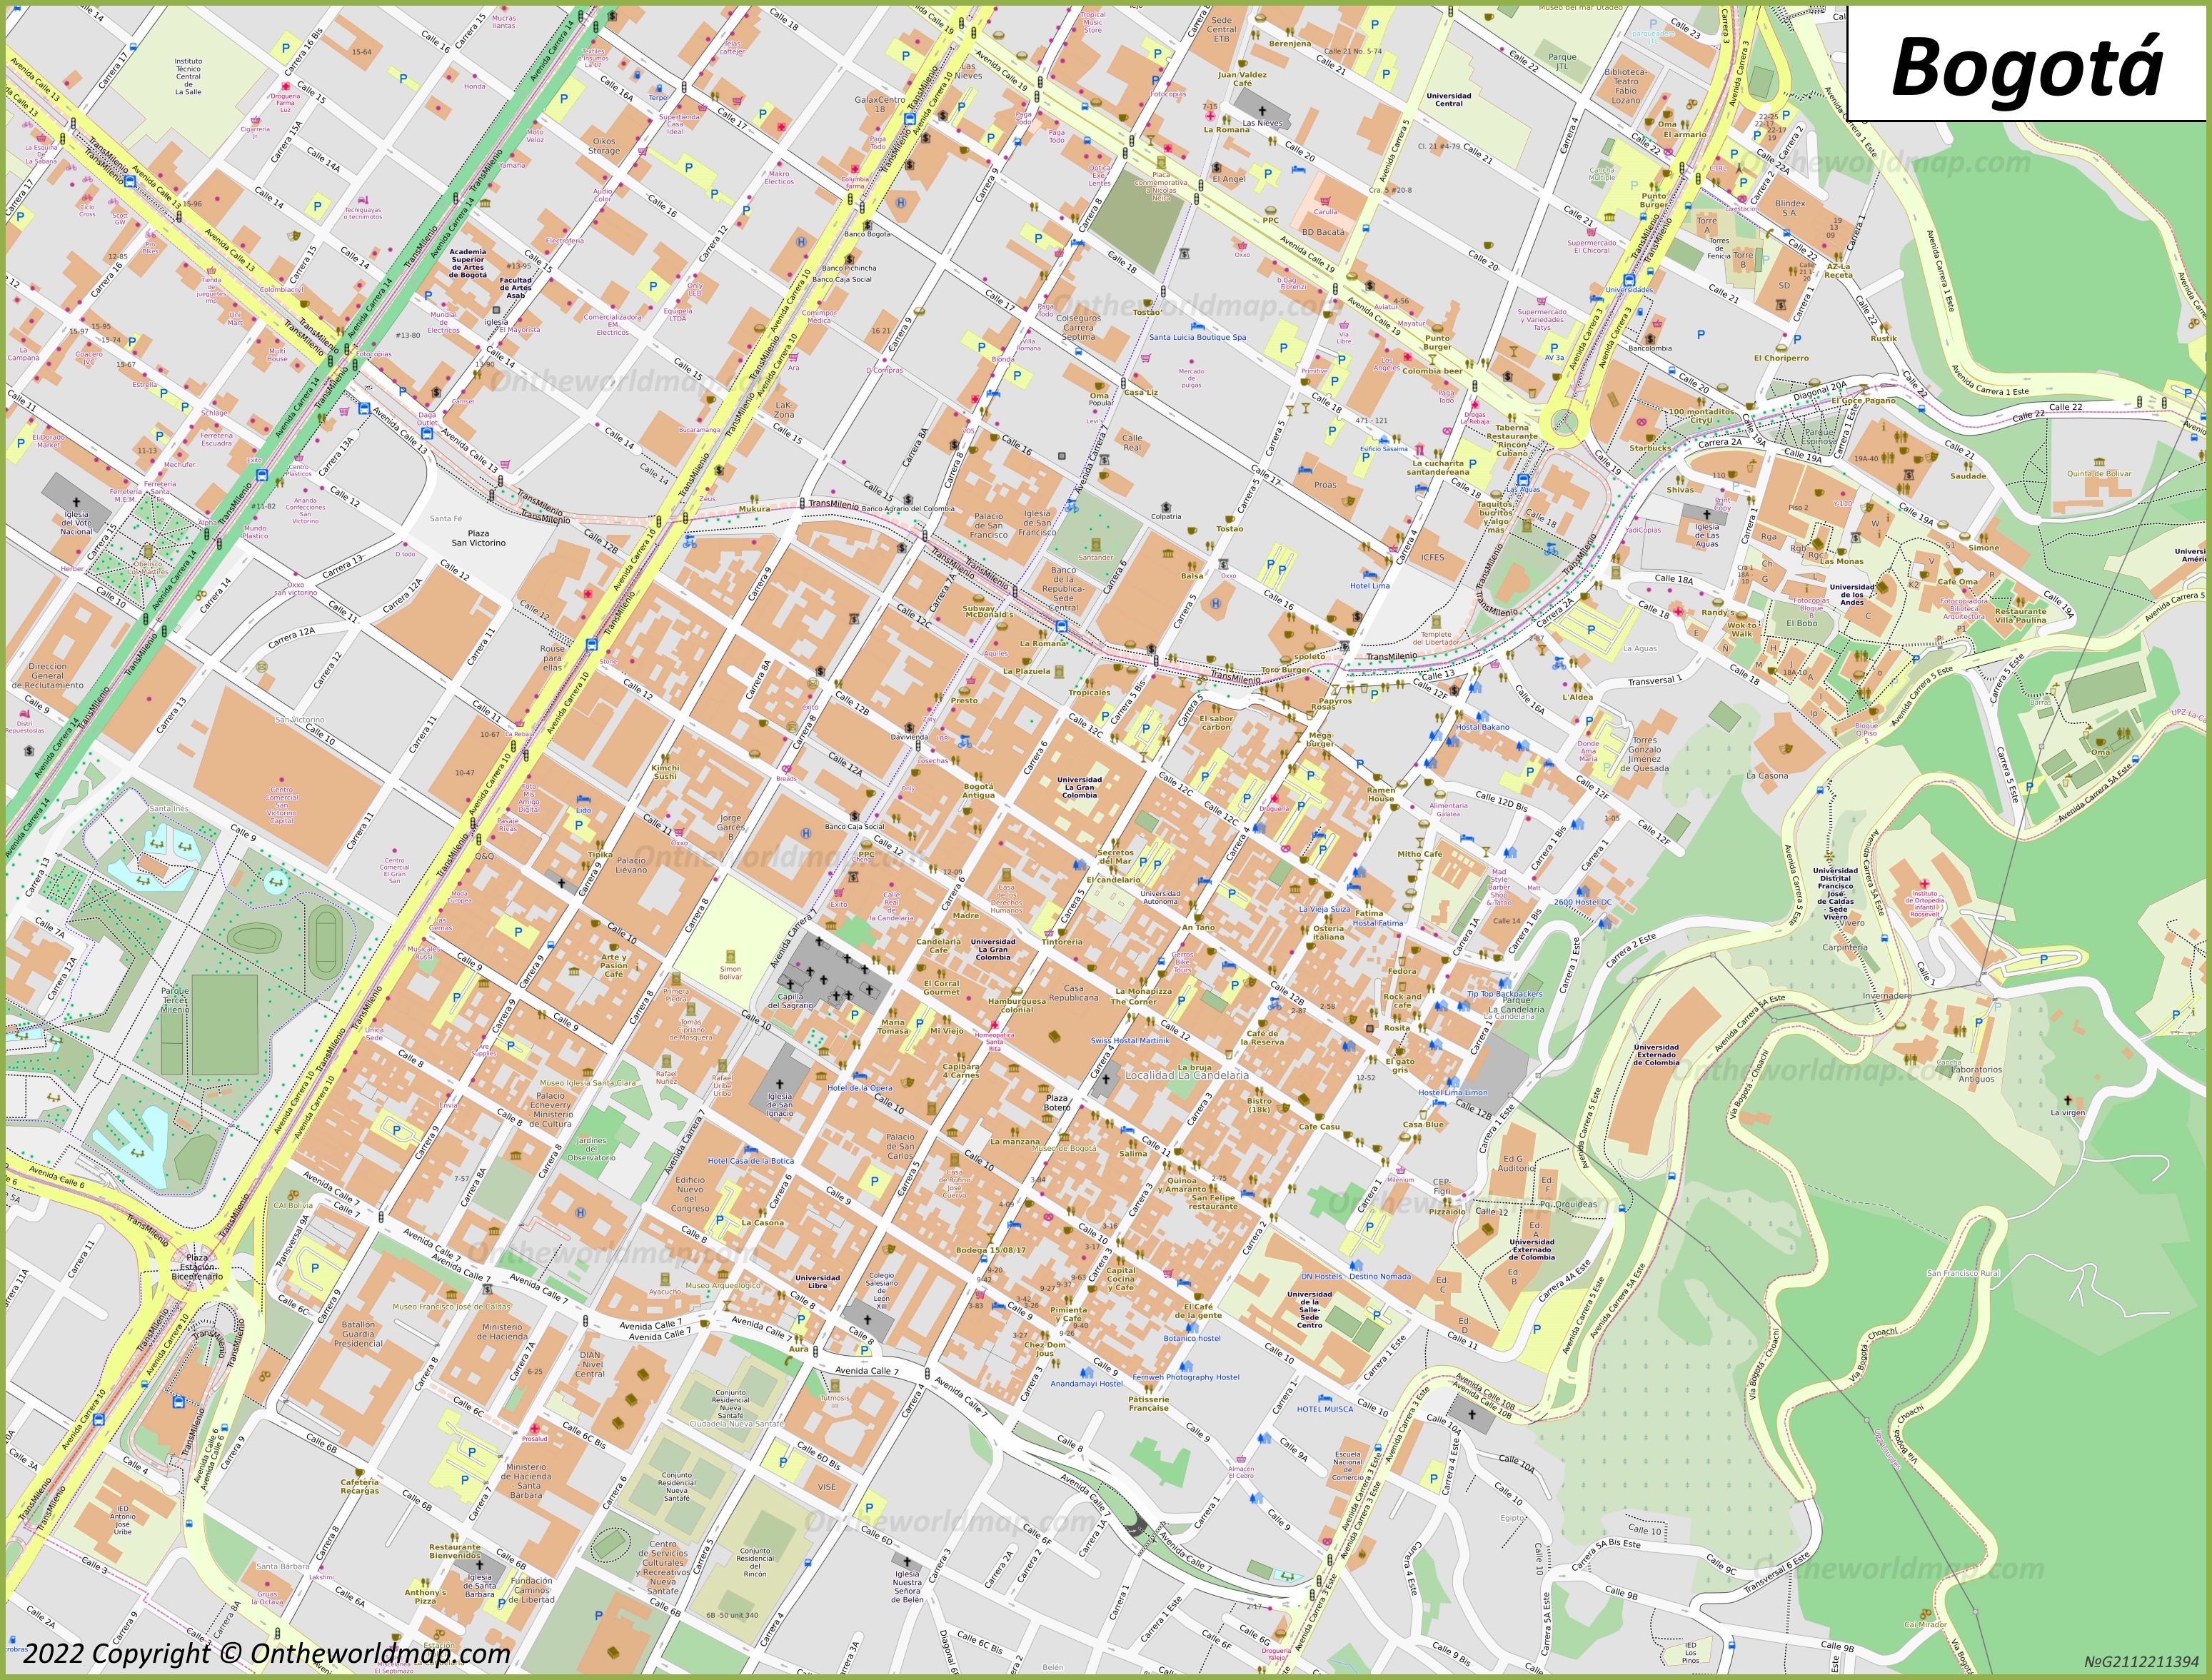 Bogotá - Mapa del centro